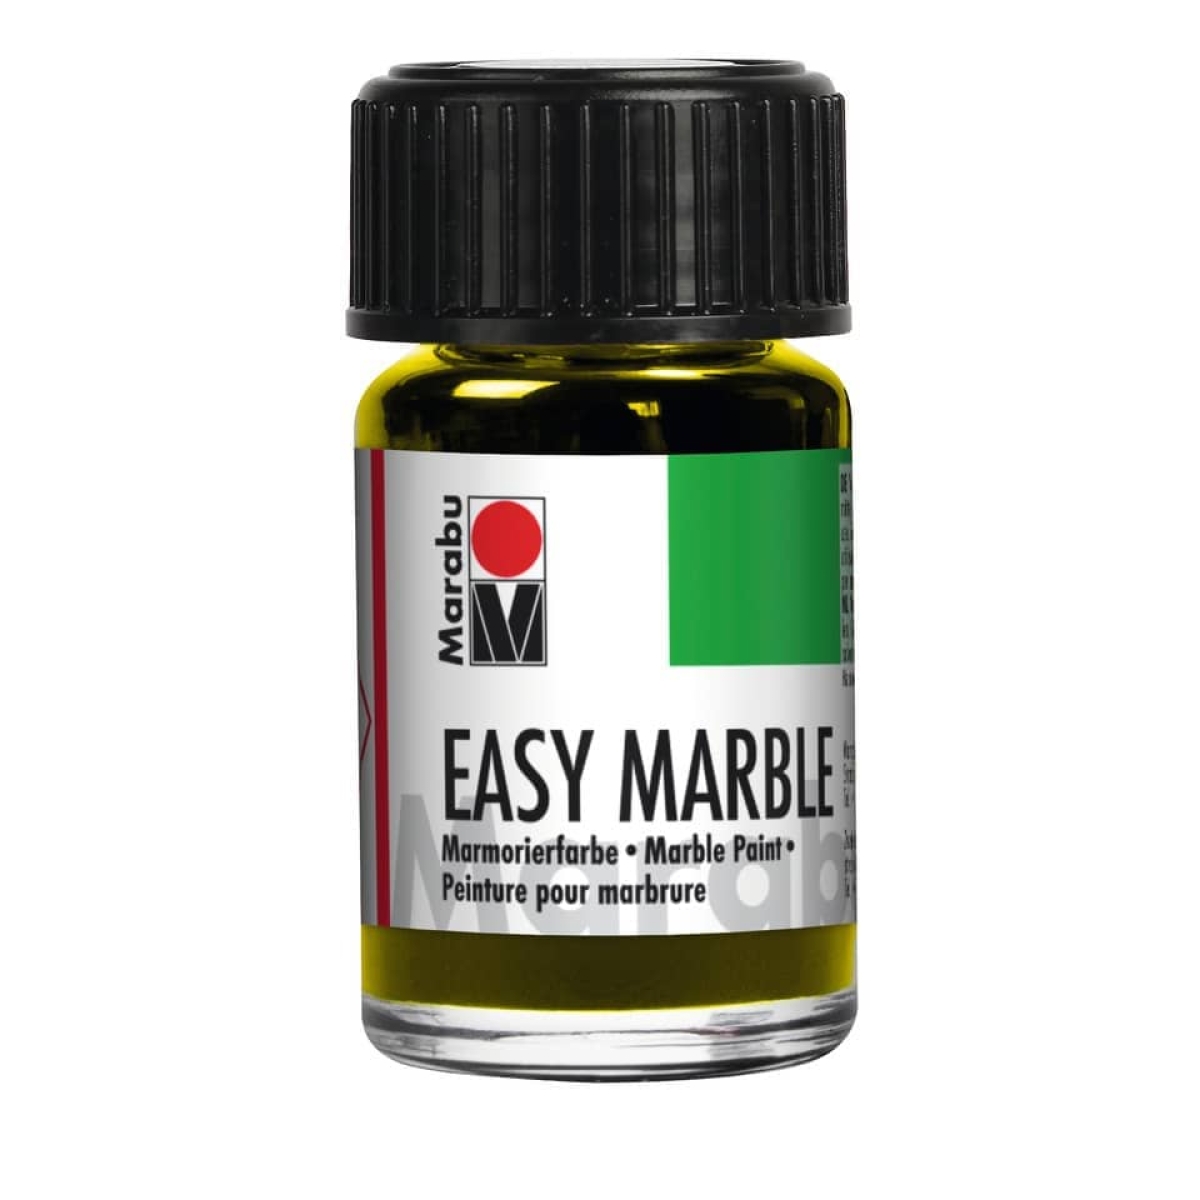 MARABUMarmorierfarbe Easy Marble, 15ml, zitronengelb 13050 039 020Artikel-Nr: 4007751088925